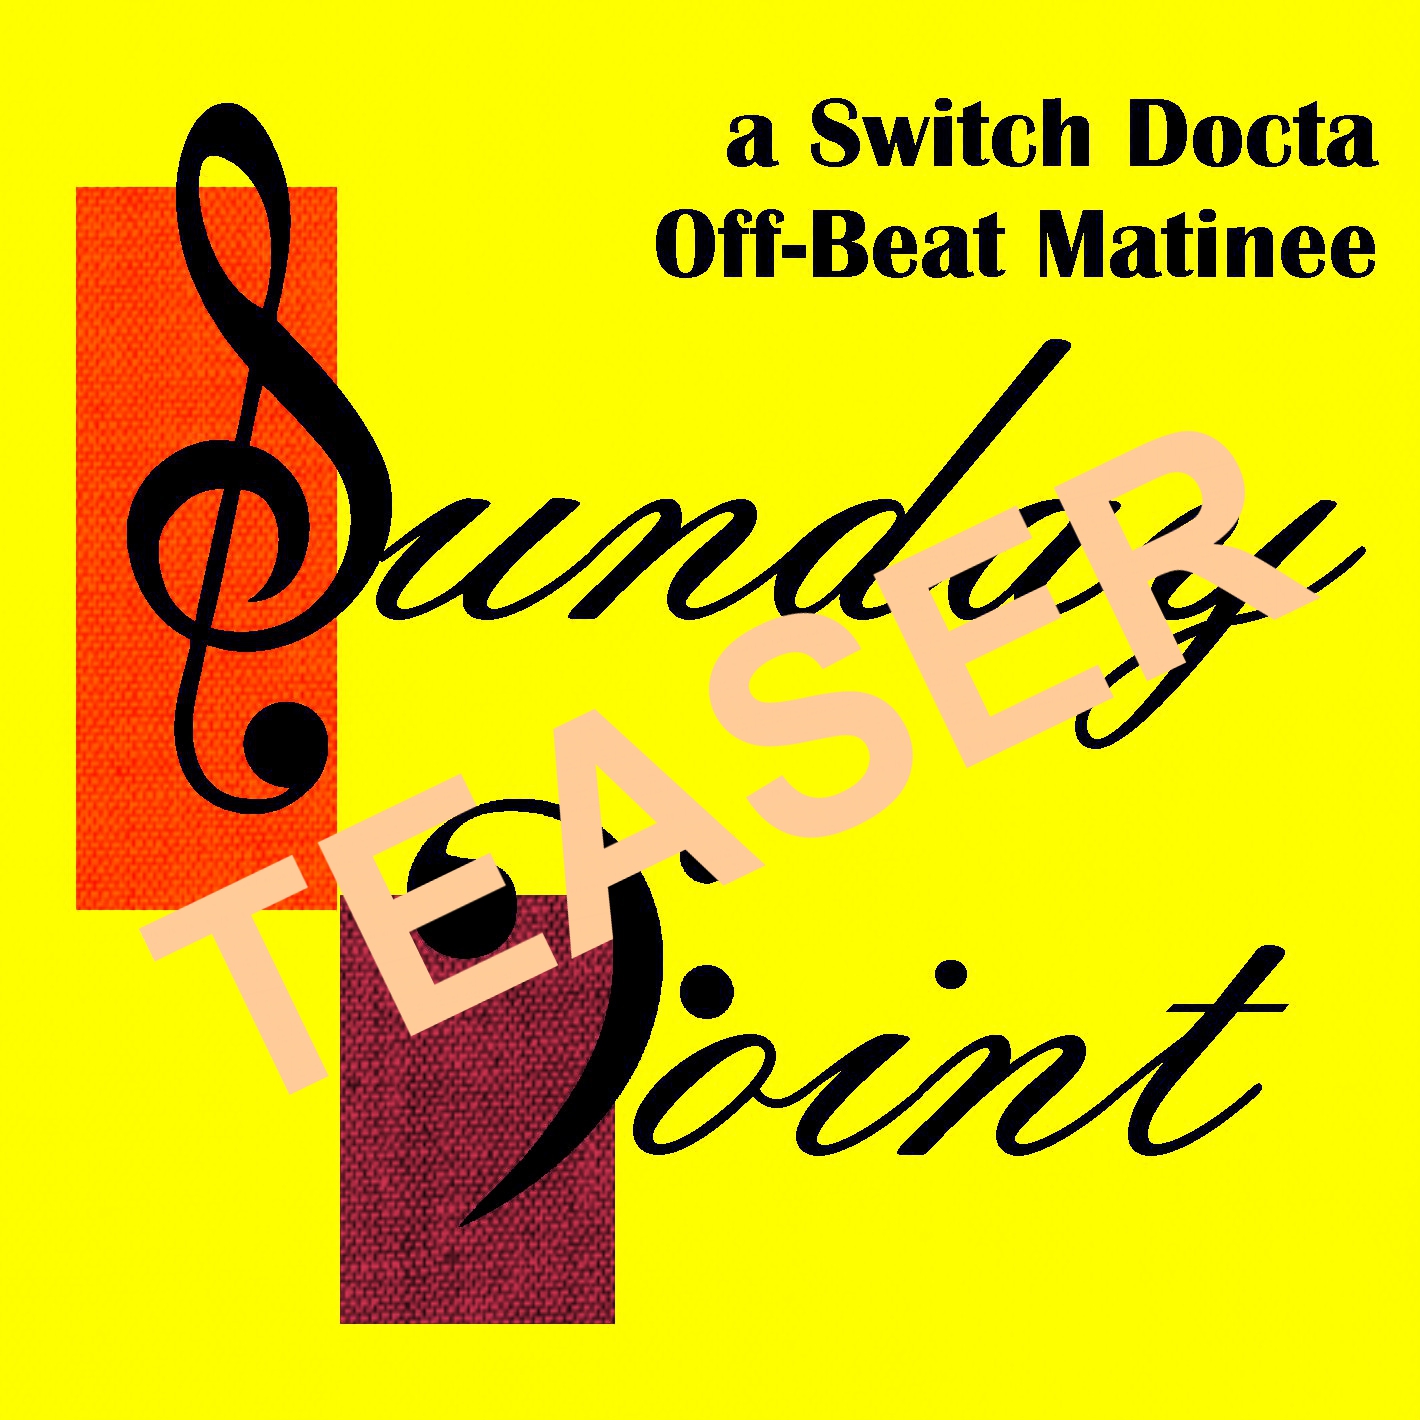 Sunday Joint - a Switch Docta Off-Beat Matinee for blogrebellen.de